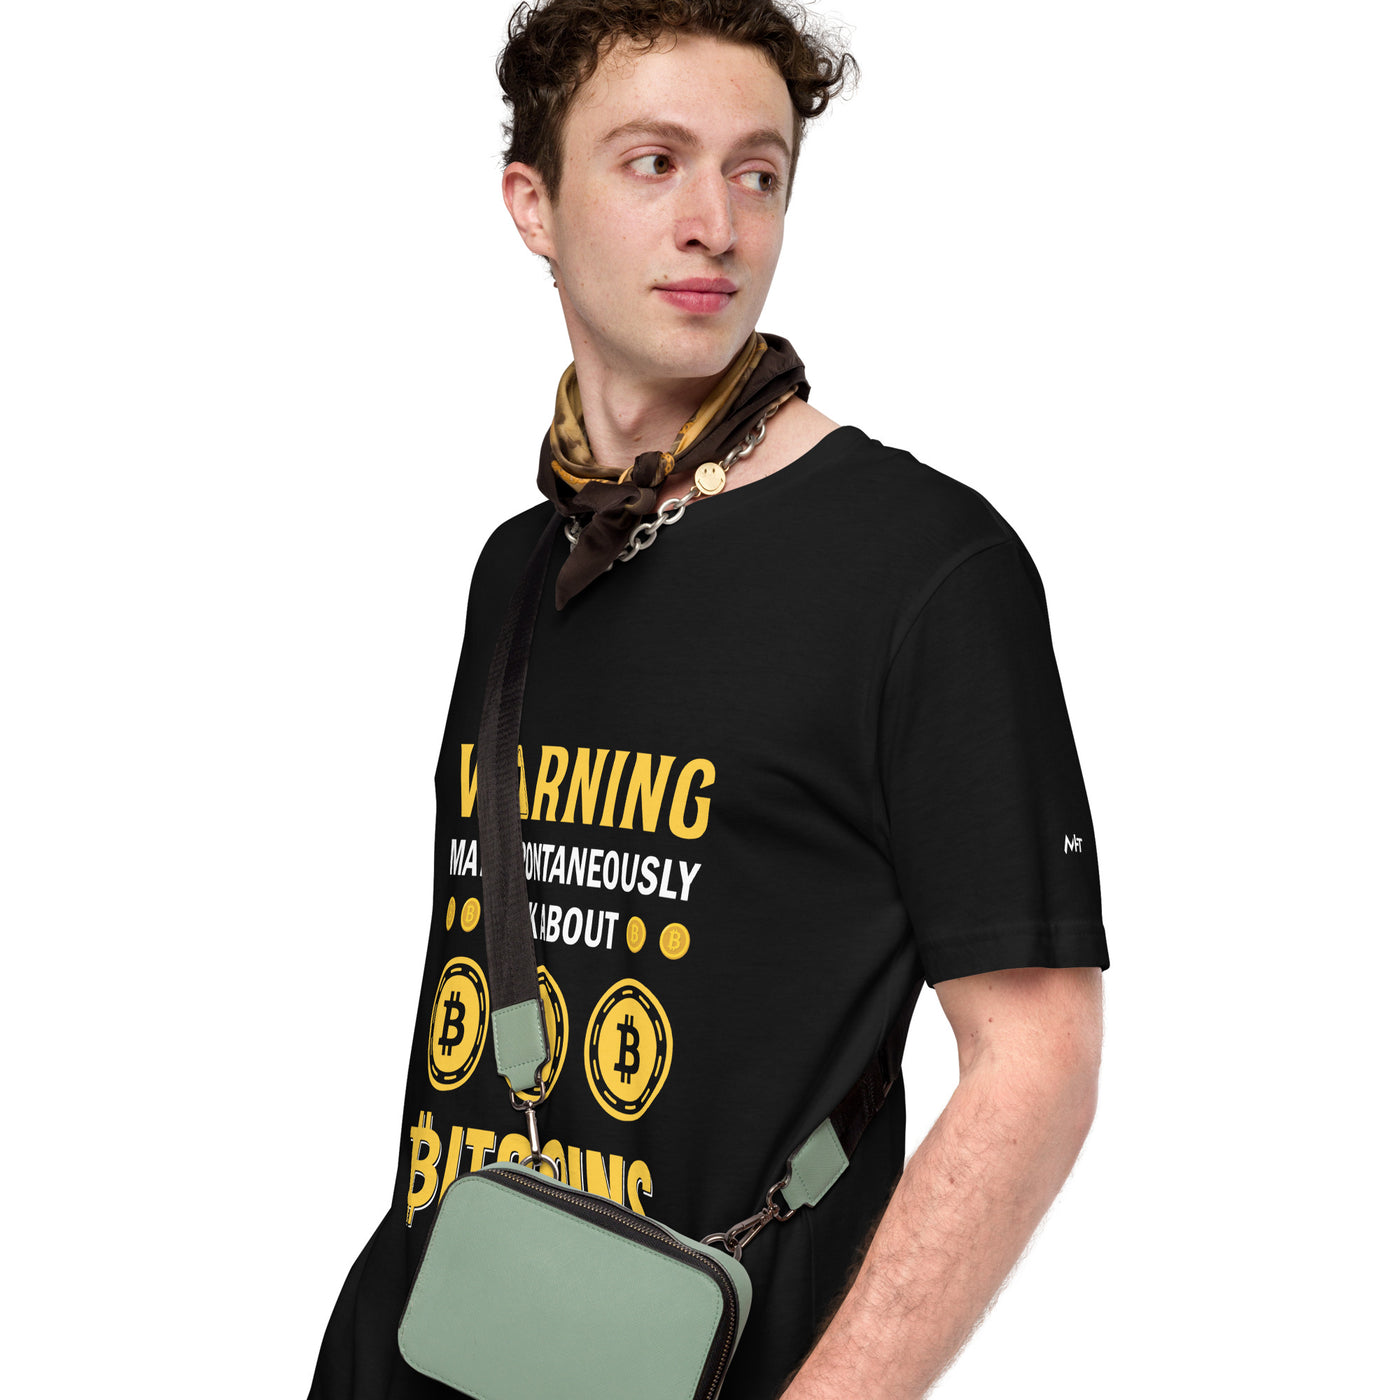 Warning! May Spontaneously talk about Bitcoins - Unisex t-shirt